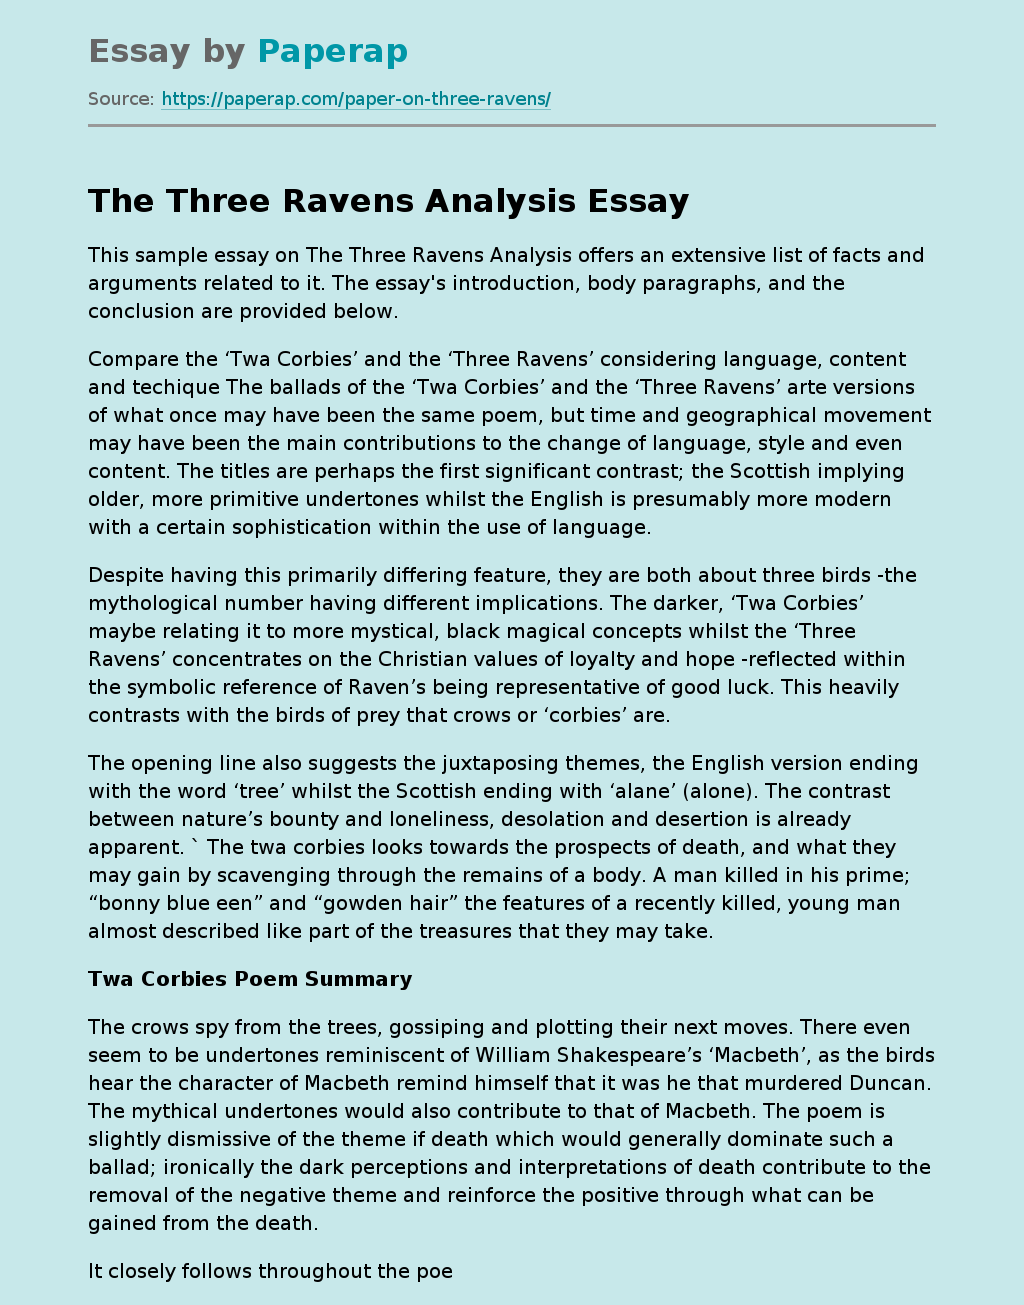 The Three Ravens Analysis